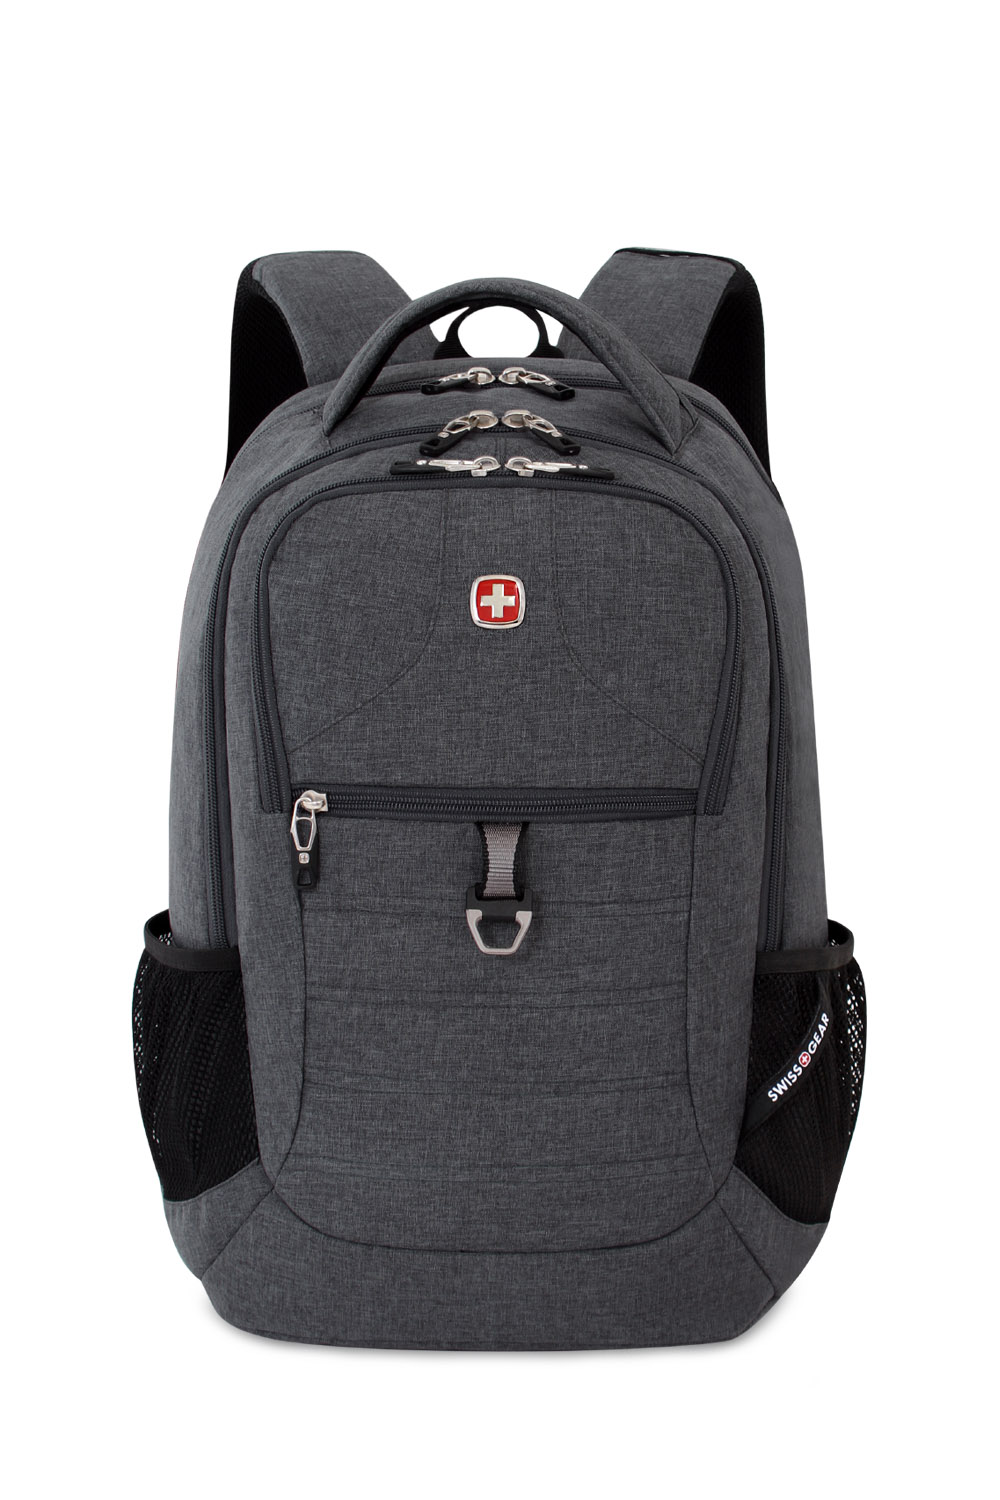 swissgear 5888 backpack grey heather front 4